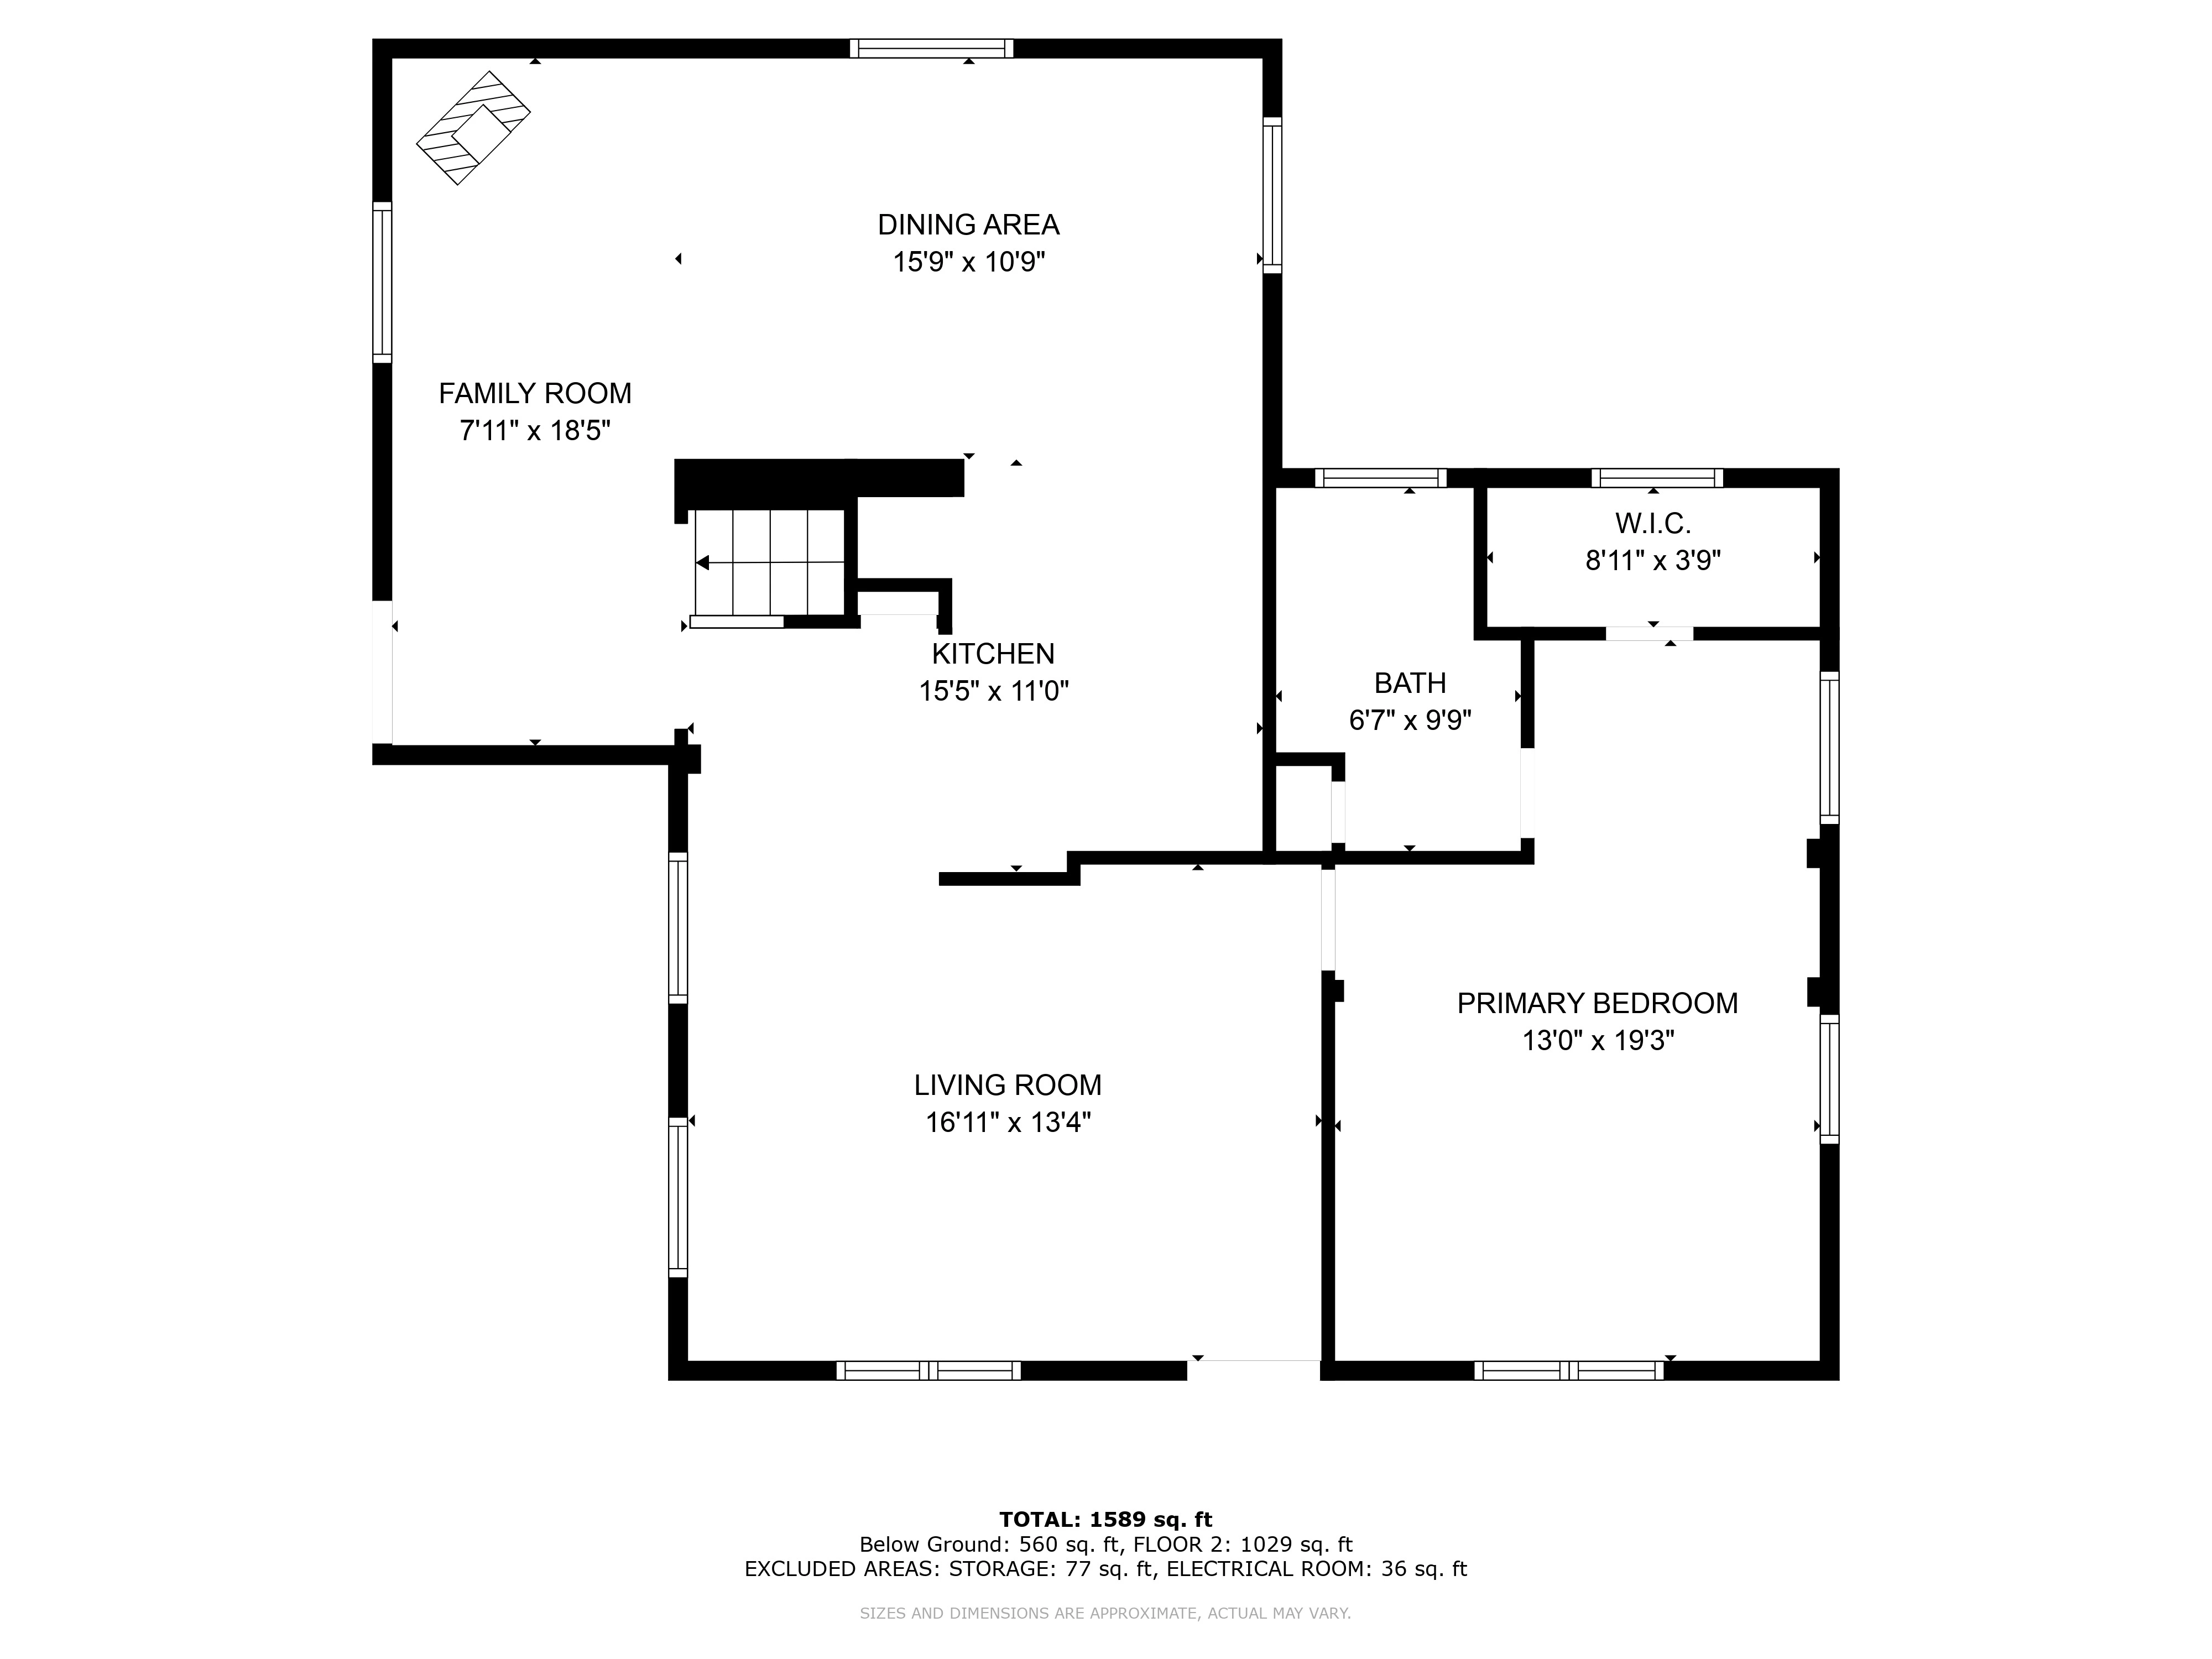 Basic walls only floor plan for real estate